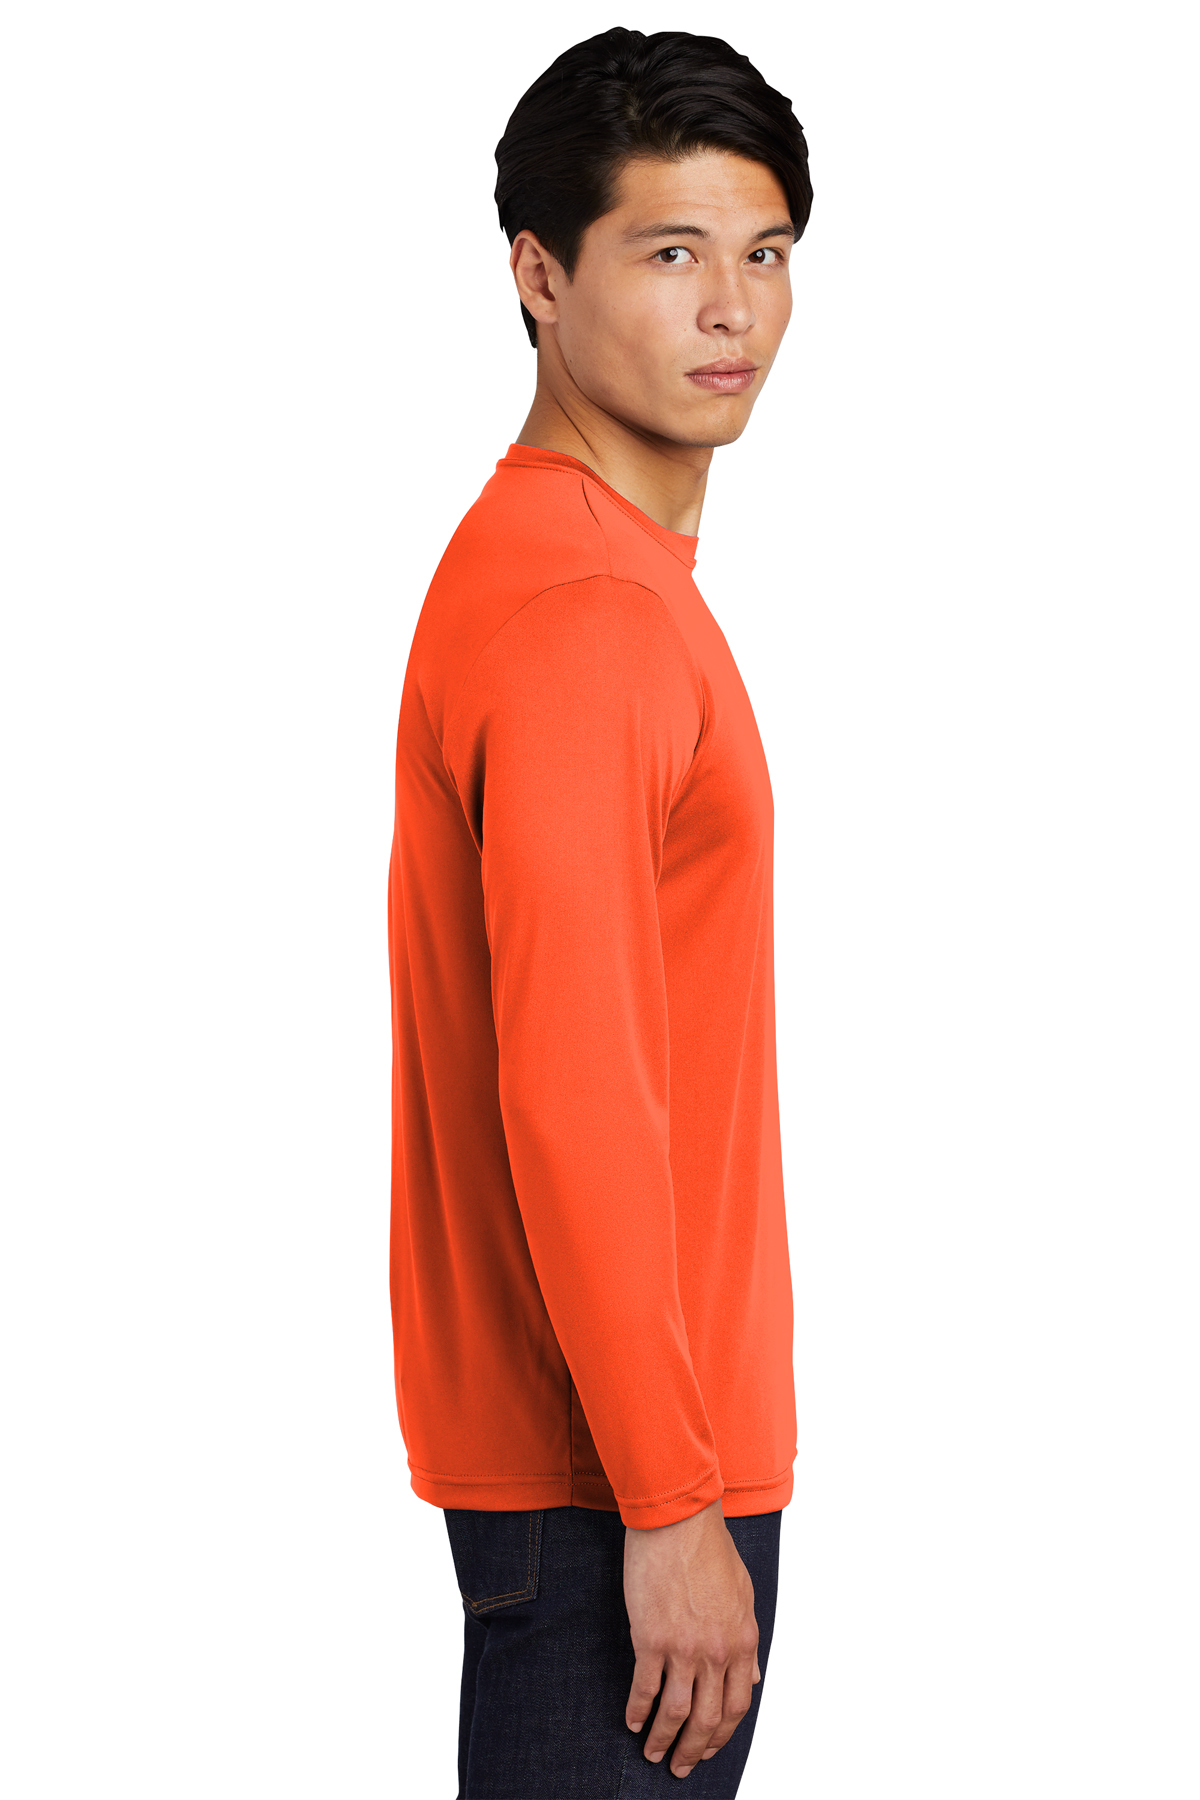 Wholesale Sport-Tek Long Sleeve T-Shirts 